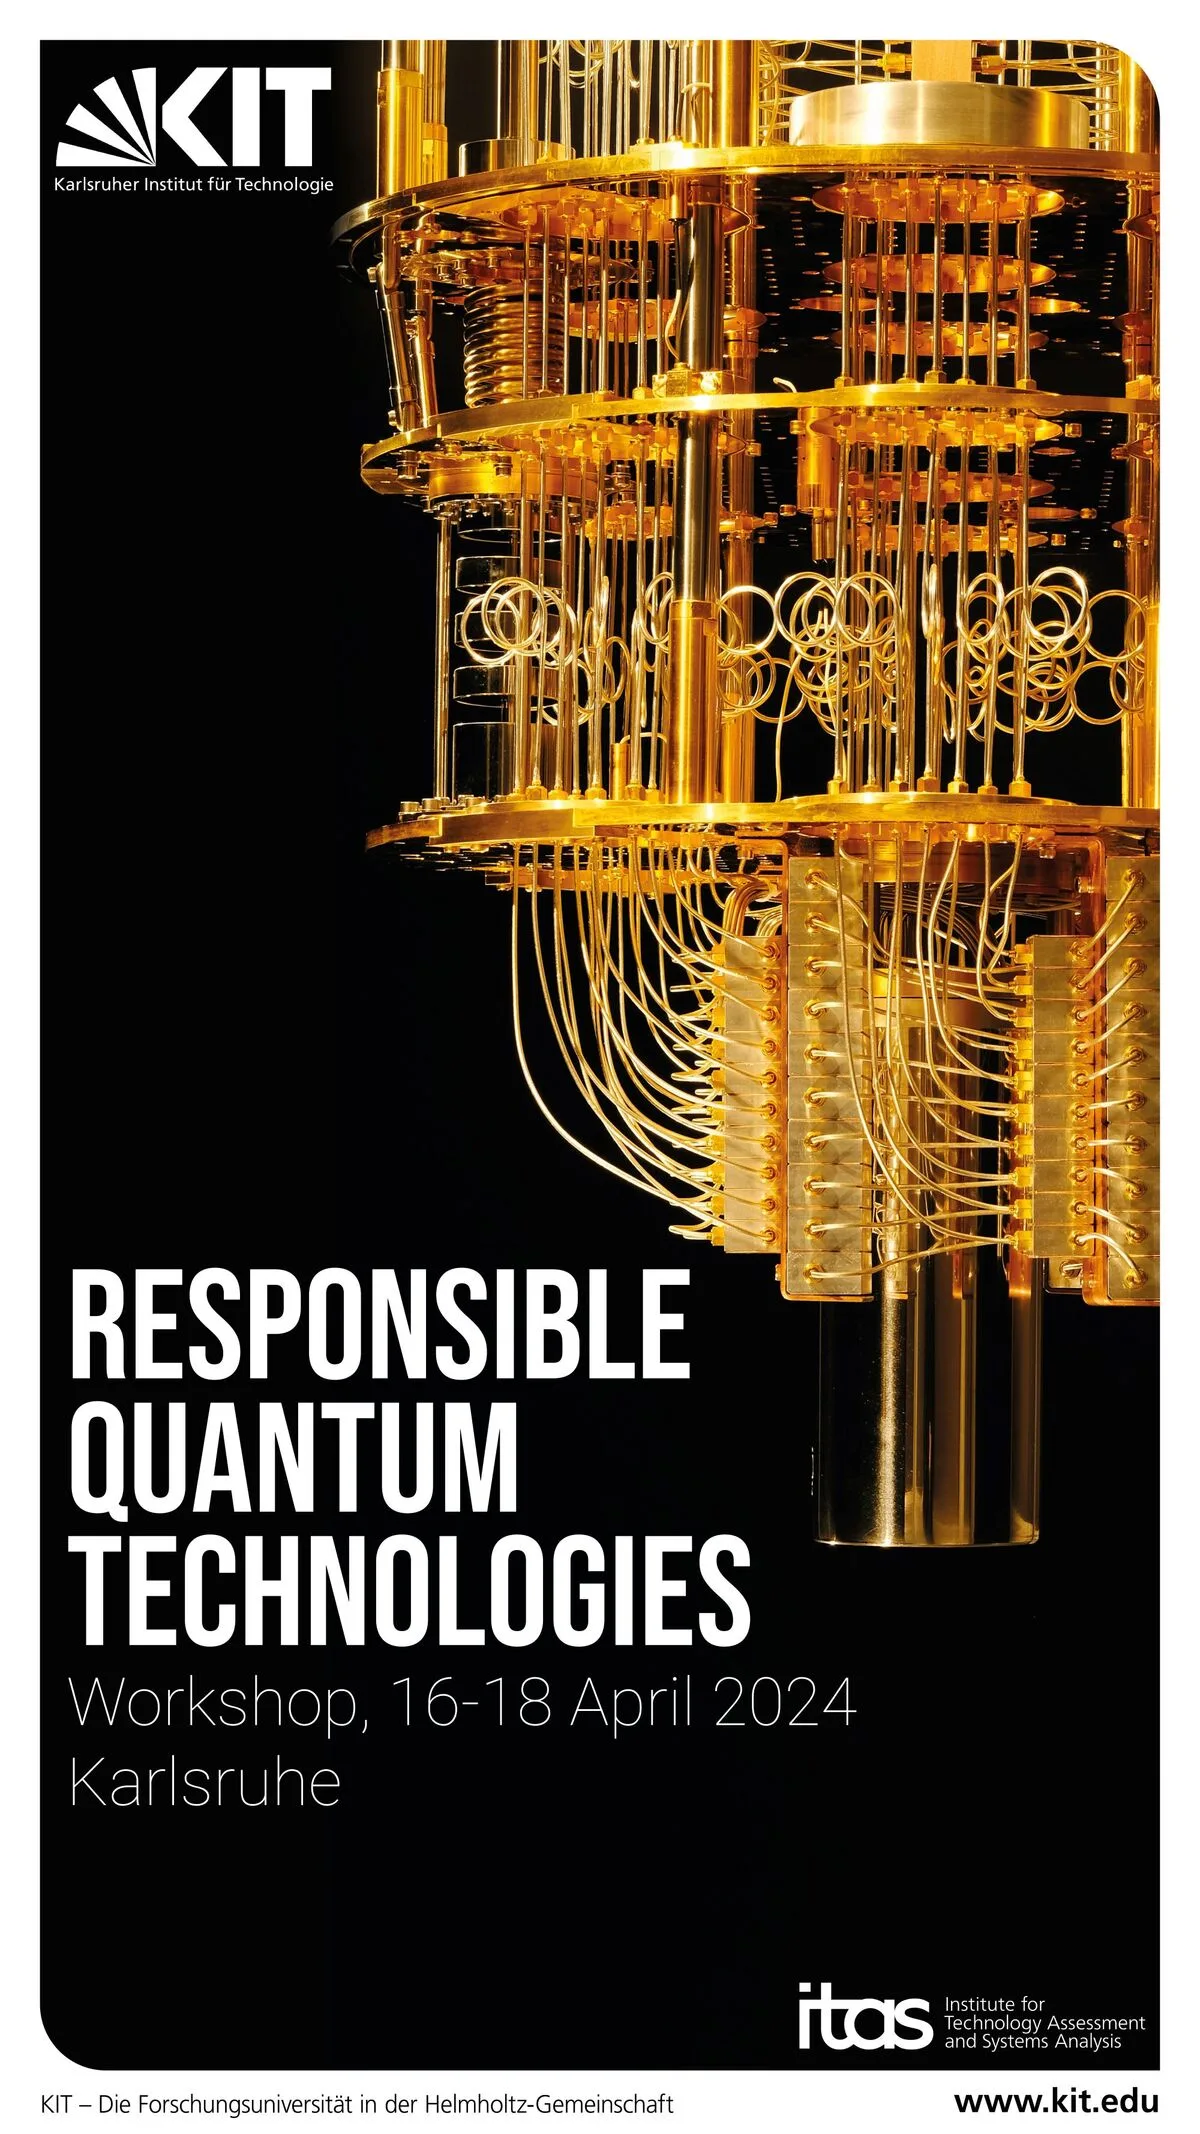 Quantum Gold Rush: Responsible Technologies Workshop Explores Future Industry Impact